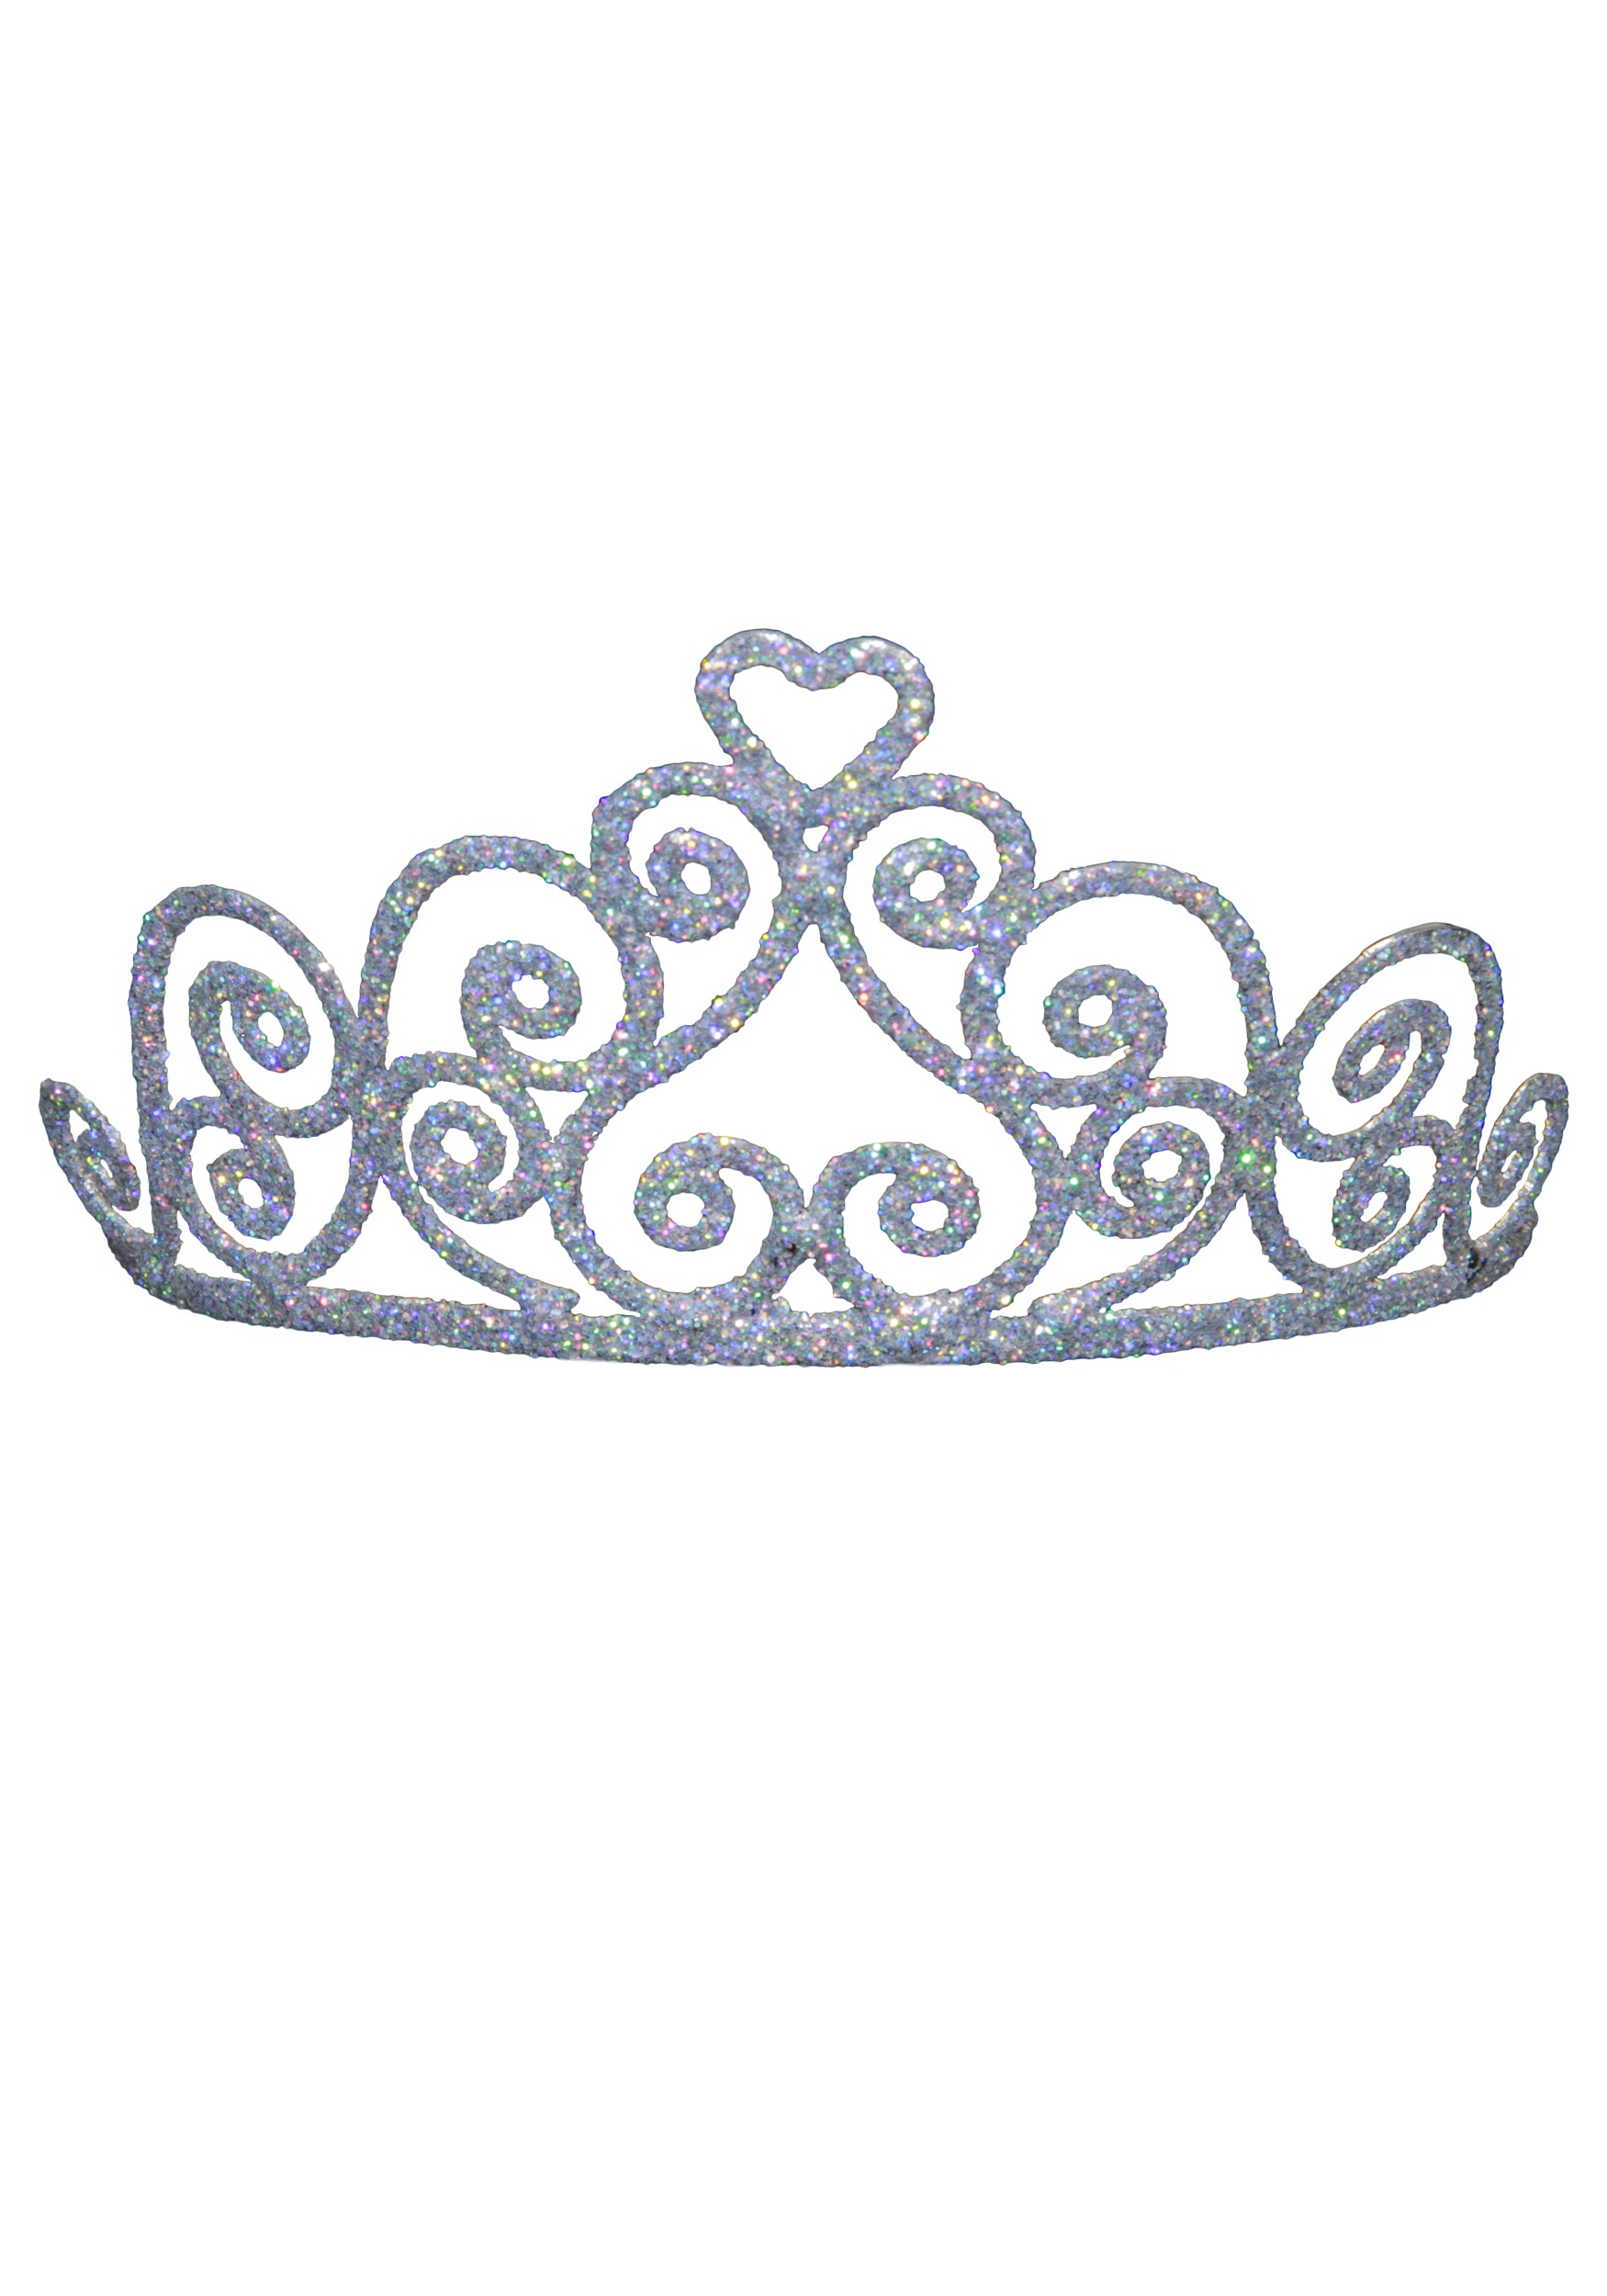 diamond crown clip art - photo #40